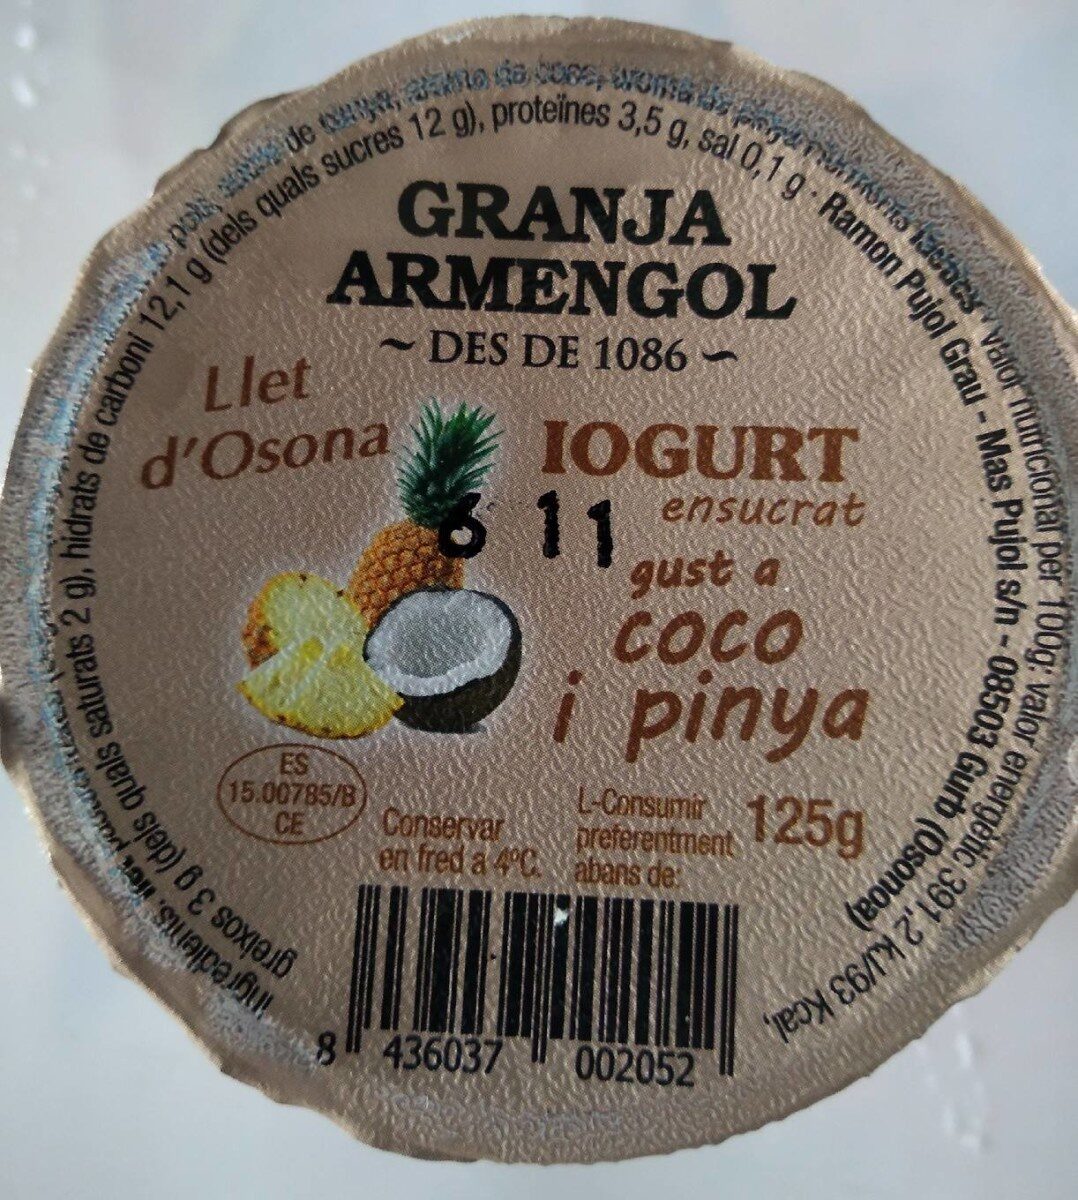 Iogurt Coco Pinya - Producto